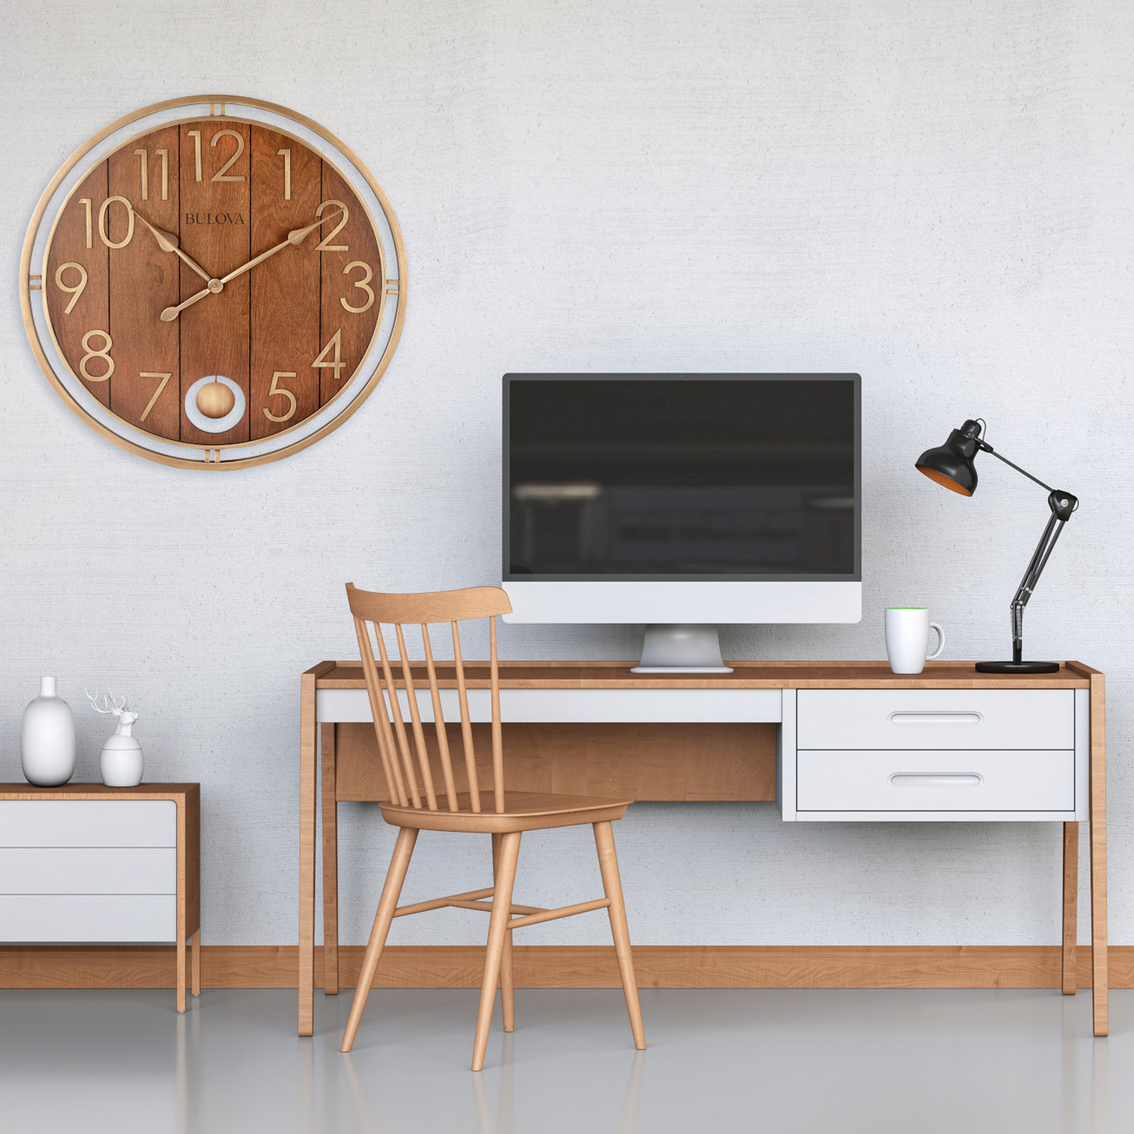 Bulova Panel Time Decorative Wall Clock C4806 - Image 2 of 2